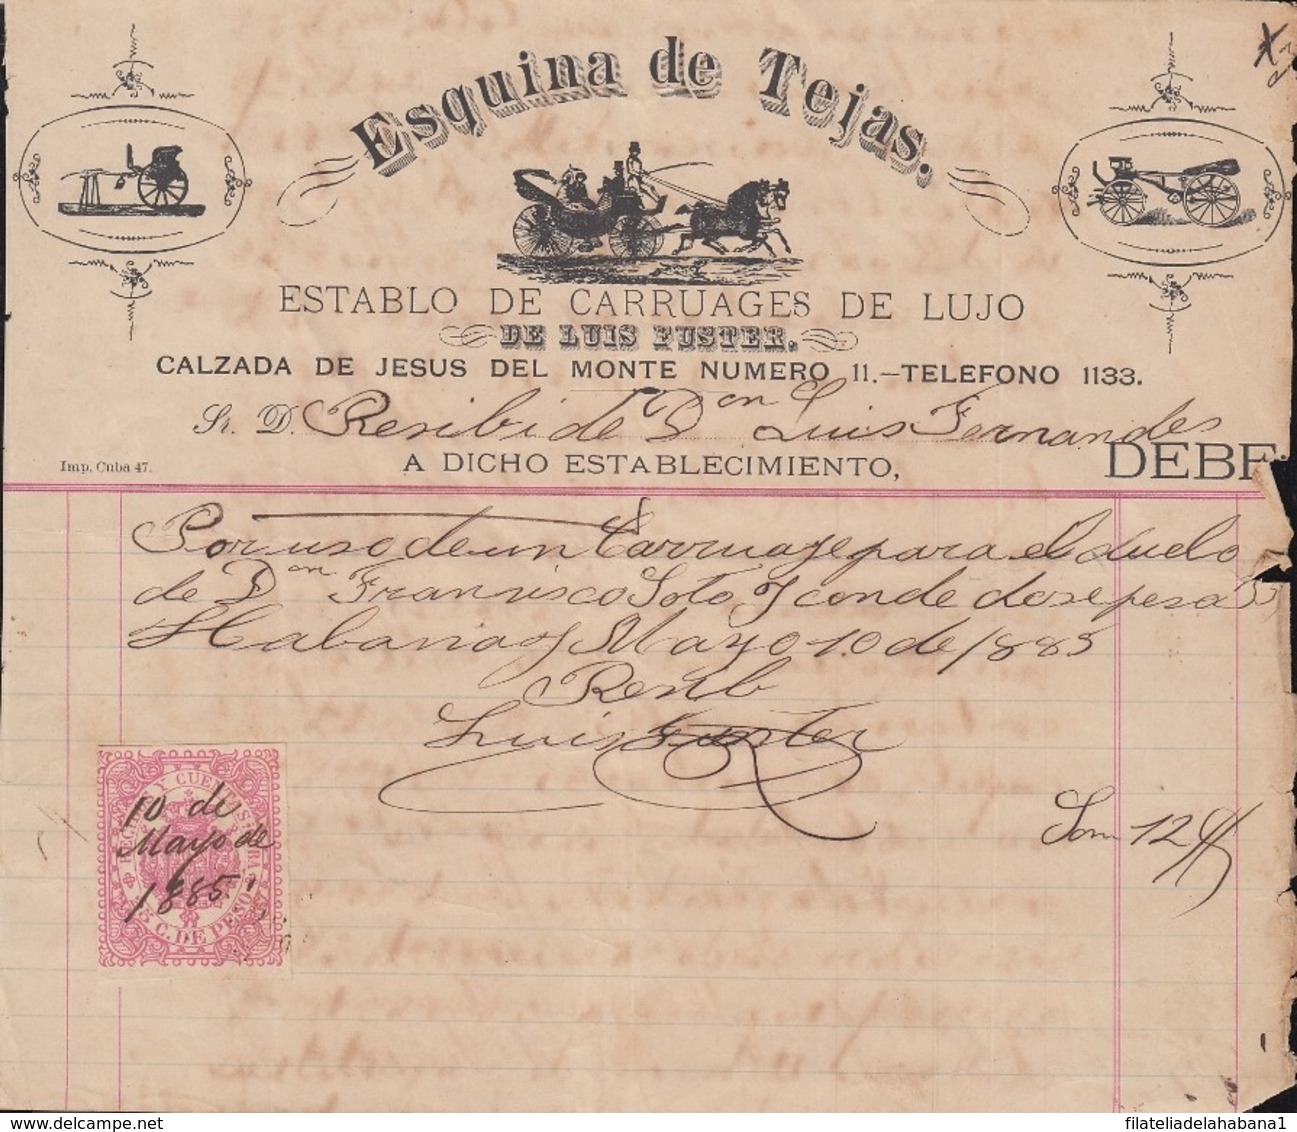 REC-135 CUBA SPAIN ESPAÑA (LG1643) RECIBOS REVENUE 1885. CARRUAJES DE LUJO CARRIAGE INVOICE. - Timbres-taxe